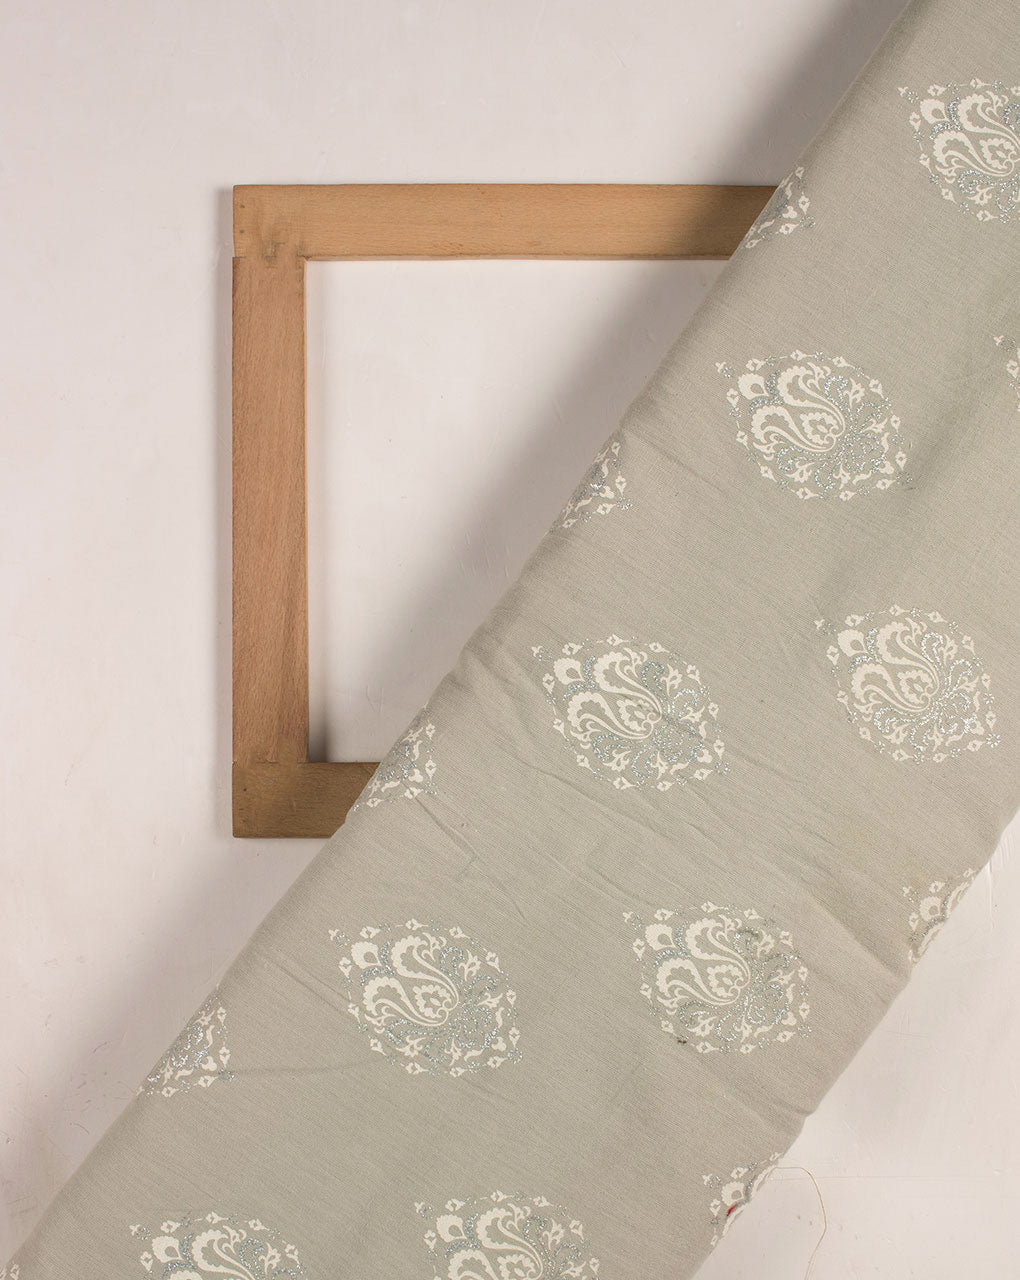 Screen Print Flex Cotton Fabric - Fabriclore.com